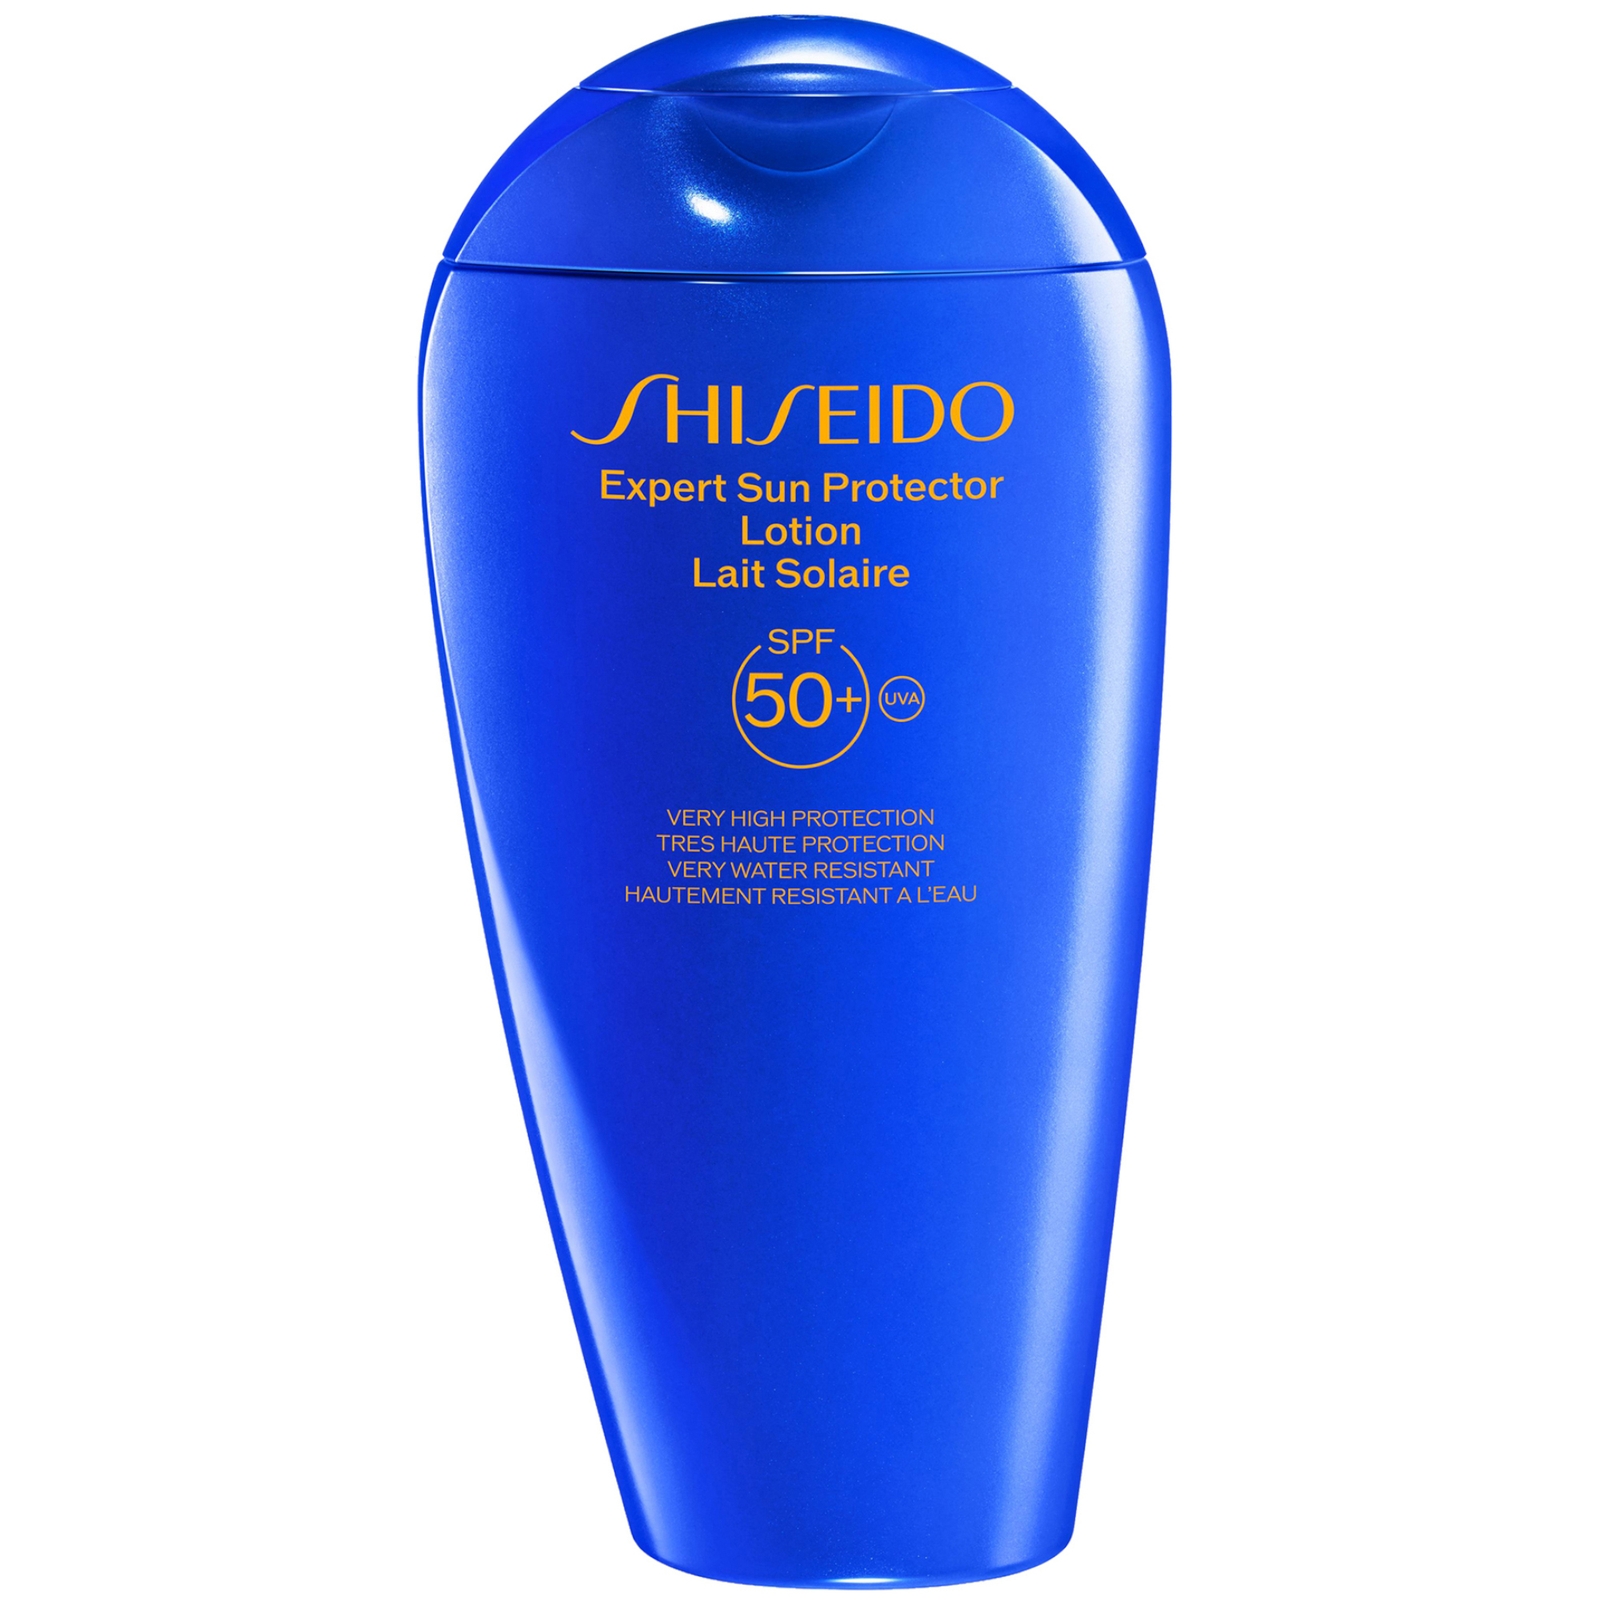 Shiseido Expert Sun Protector Lotion Spf50   - Expert Sun Protector Expert Sun Protector Lotion Spf50+